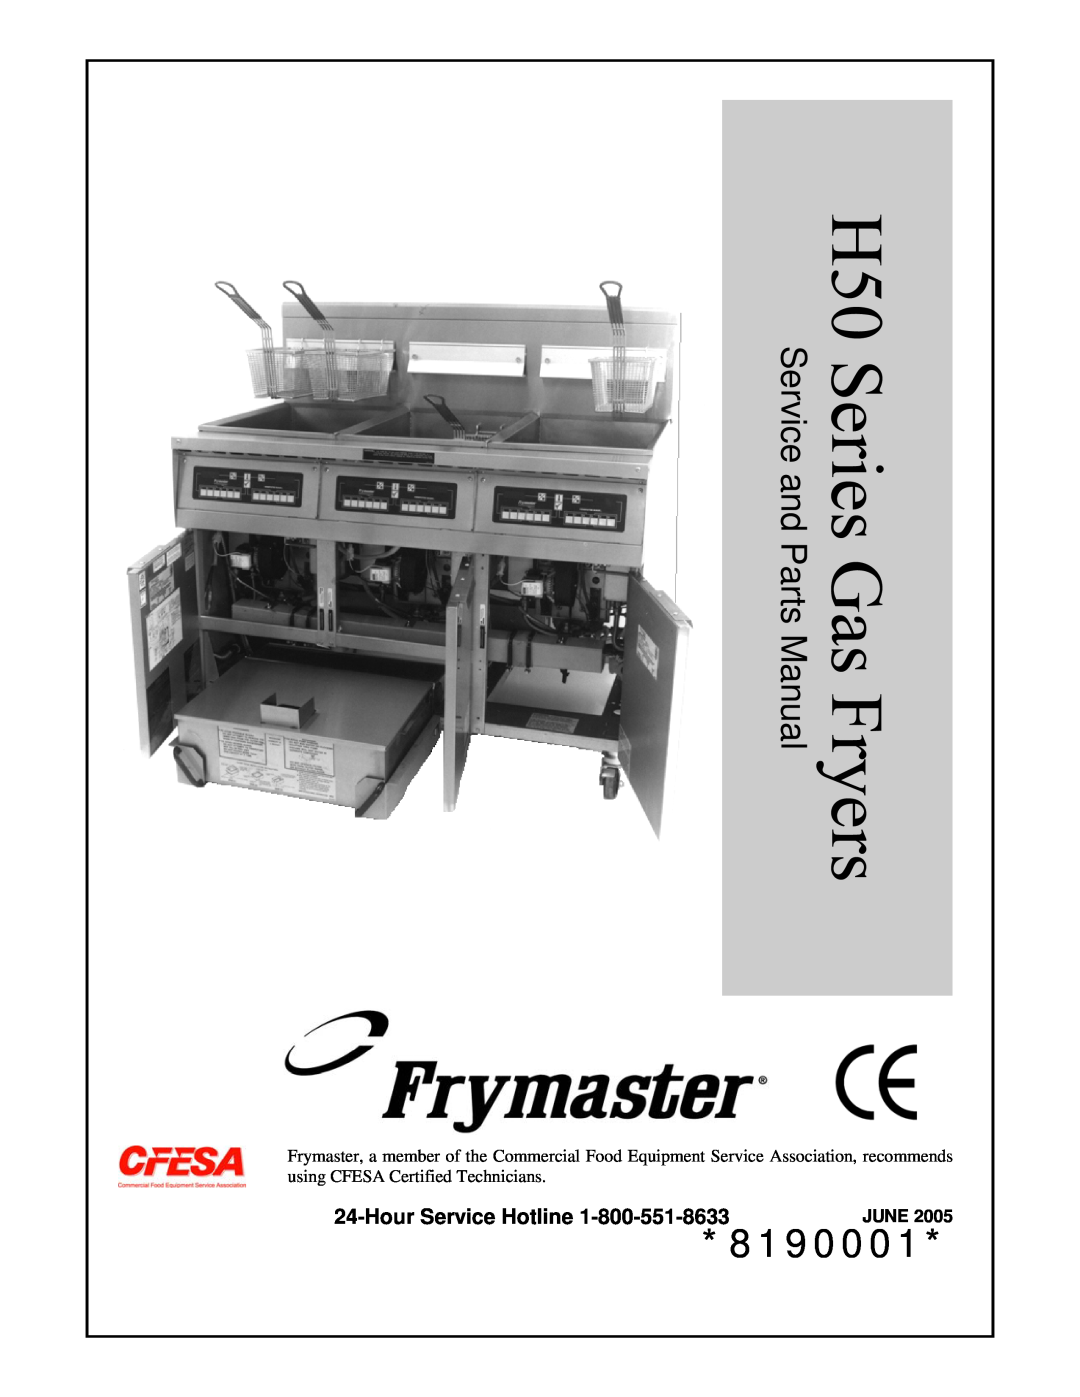 Frymaster H50 Series manual HourService Hotline, 8190001, June 